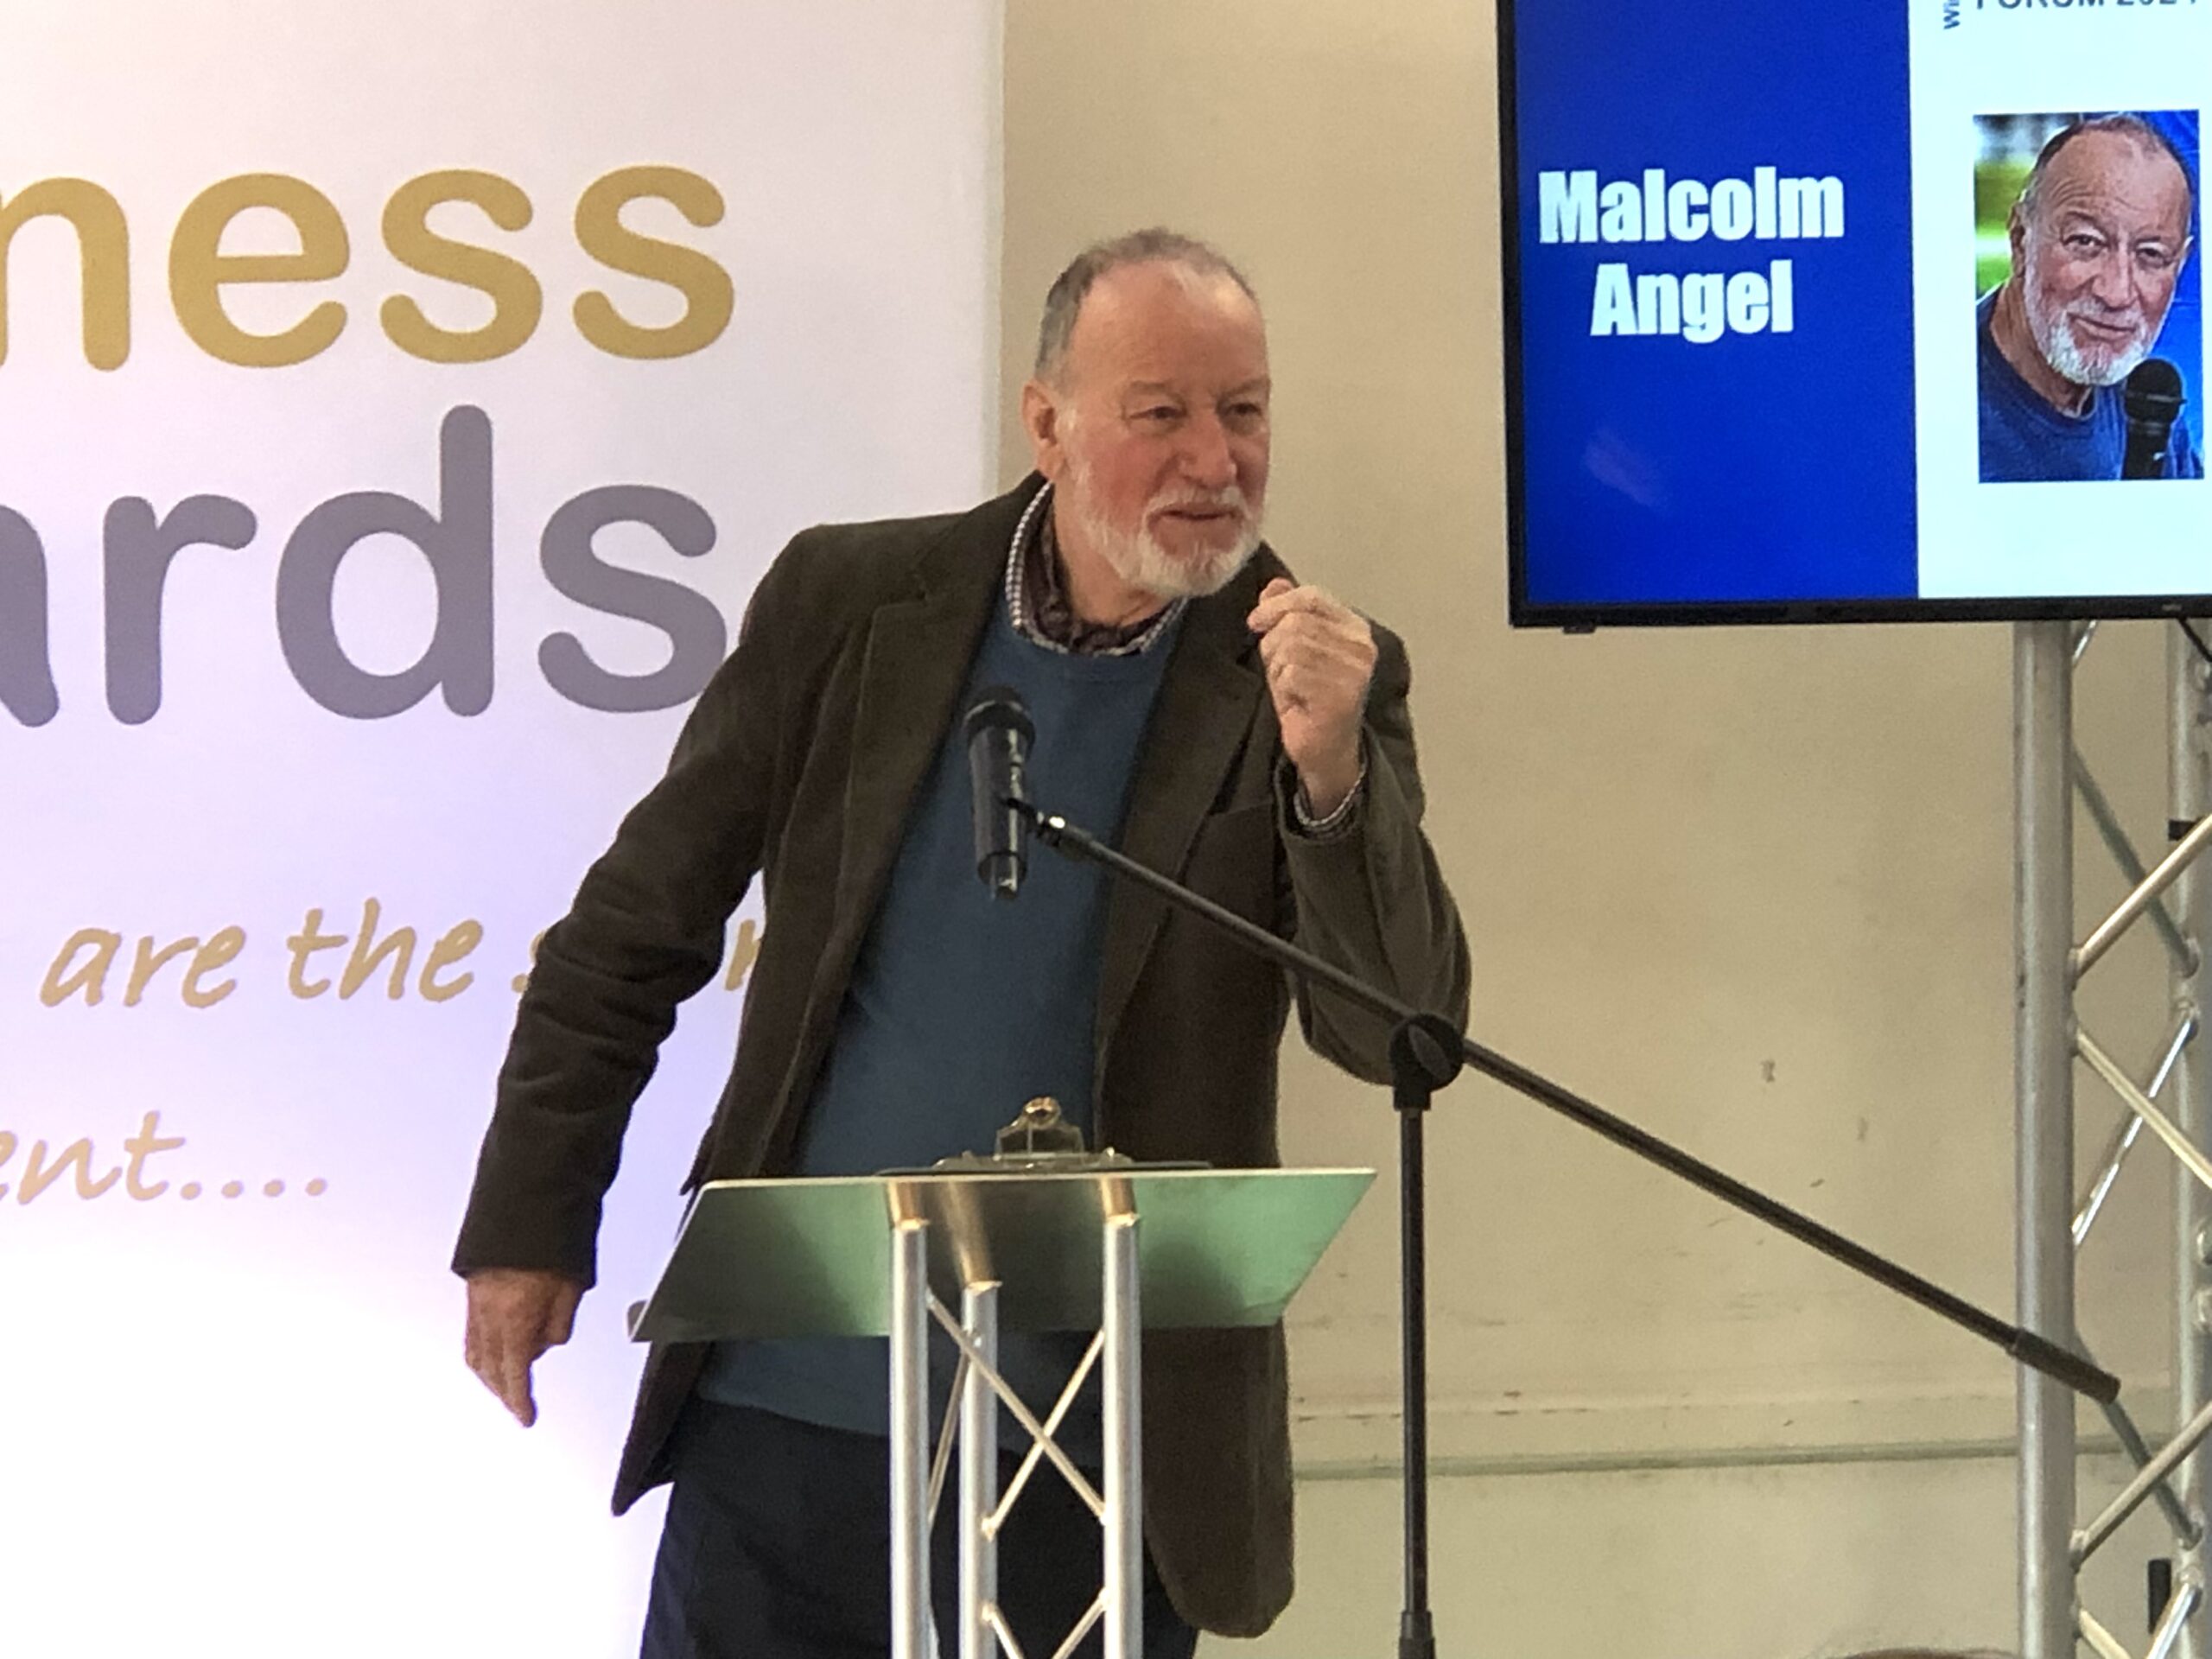 Malcolm Angel runs the Wimborne Literary Festival. 